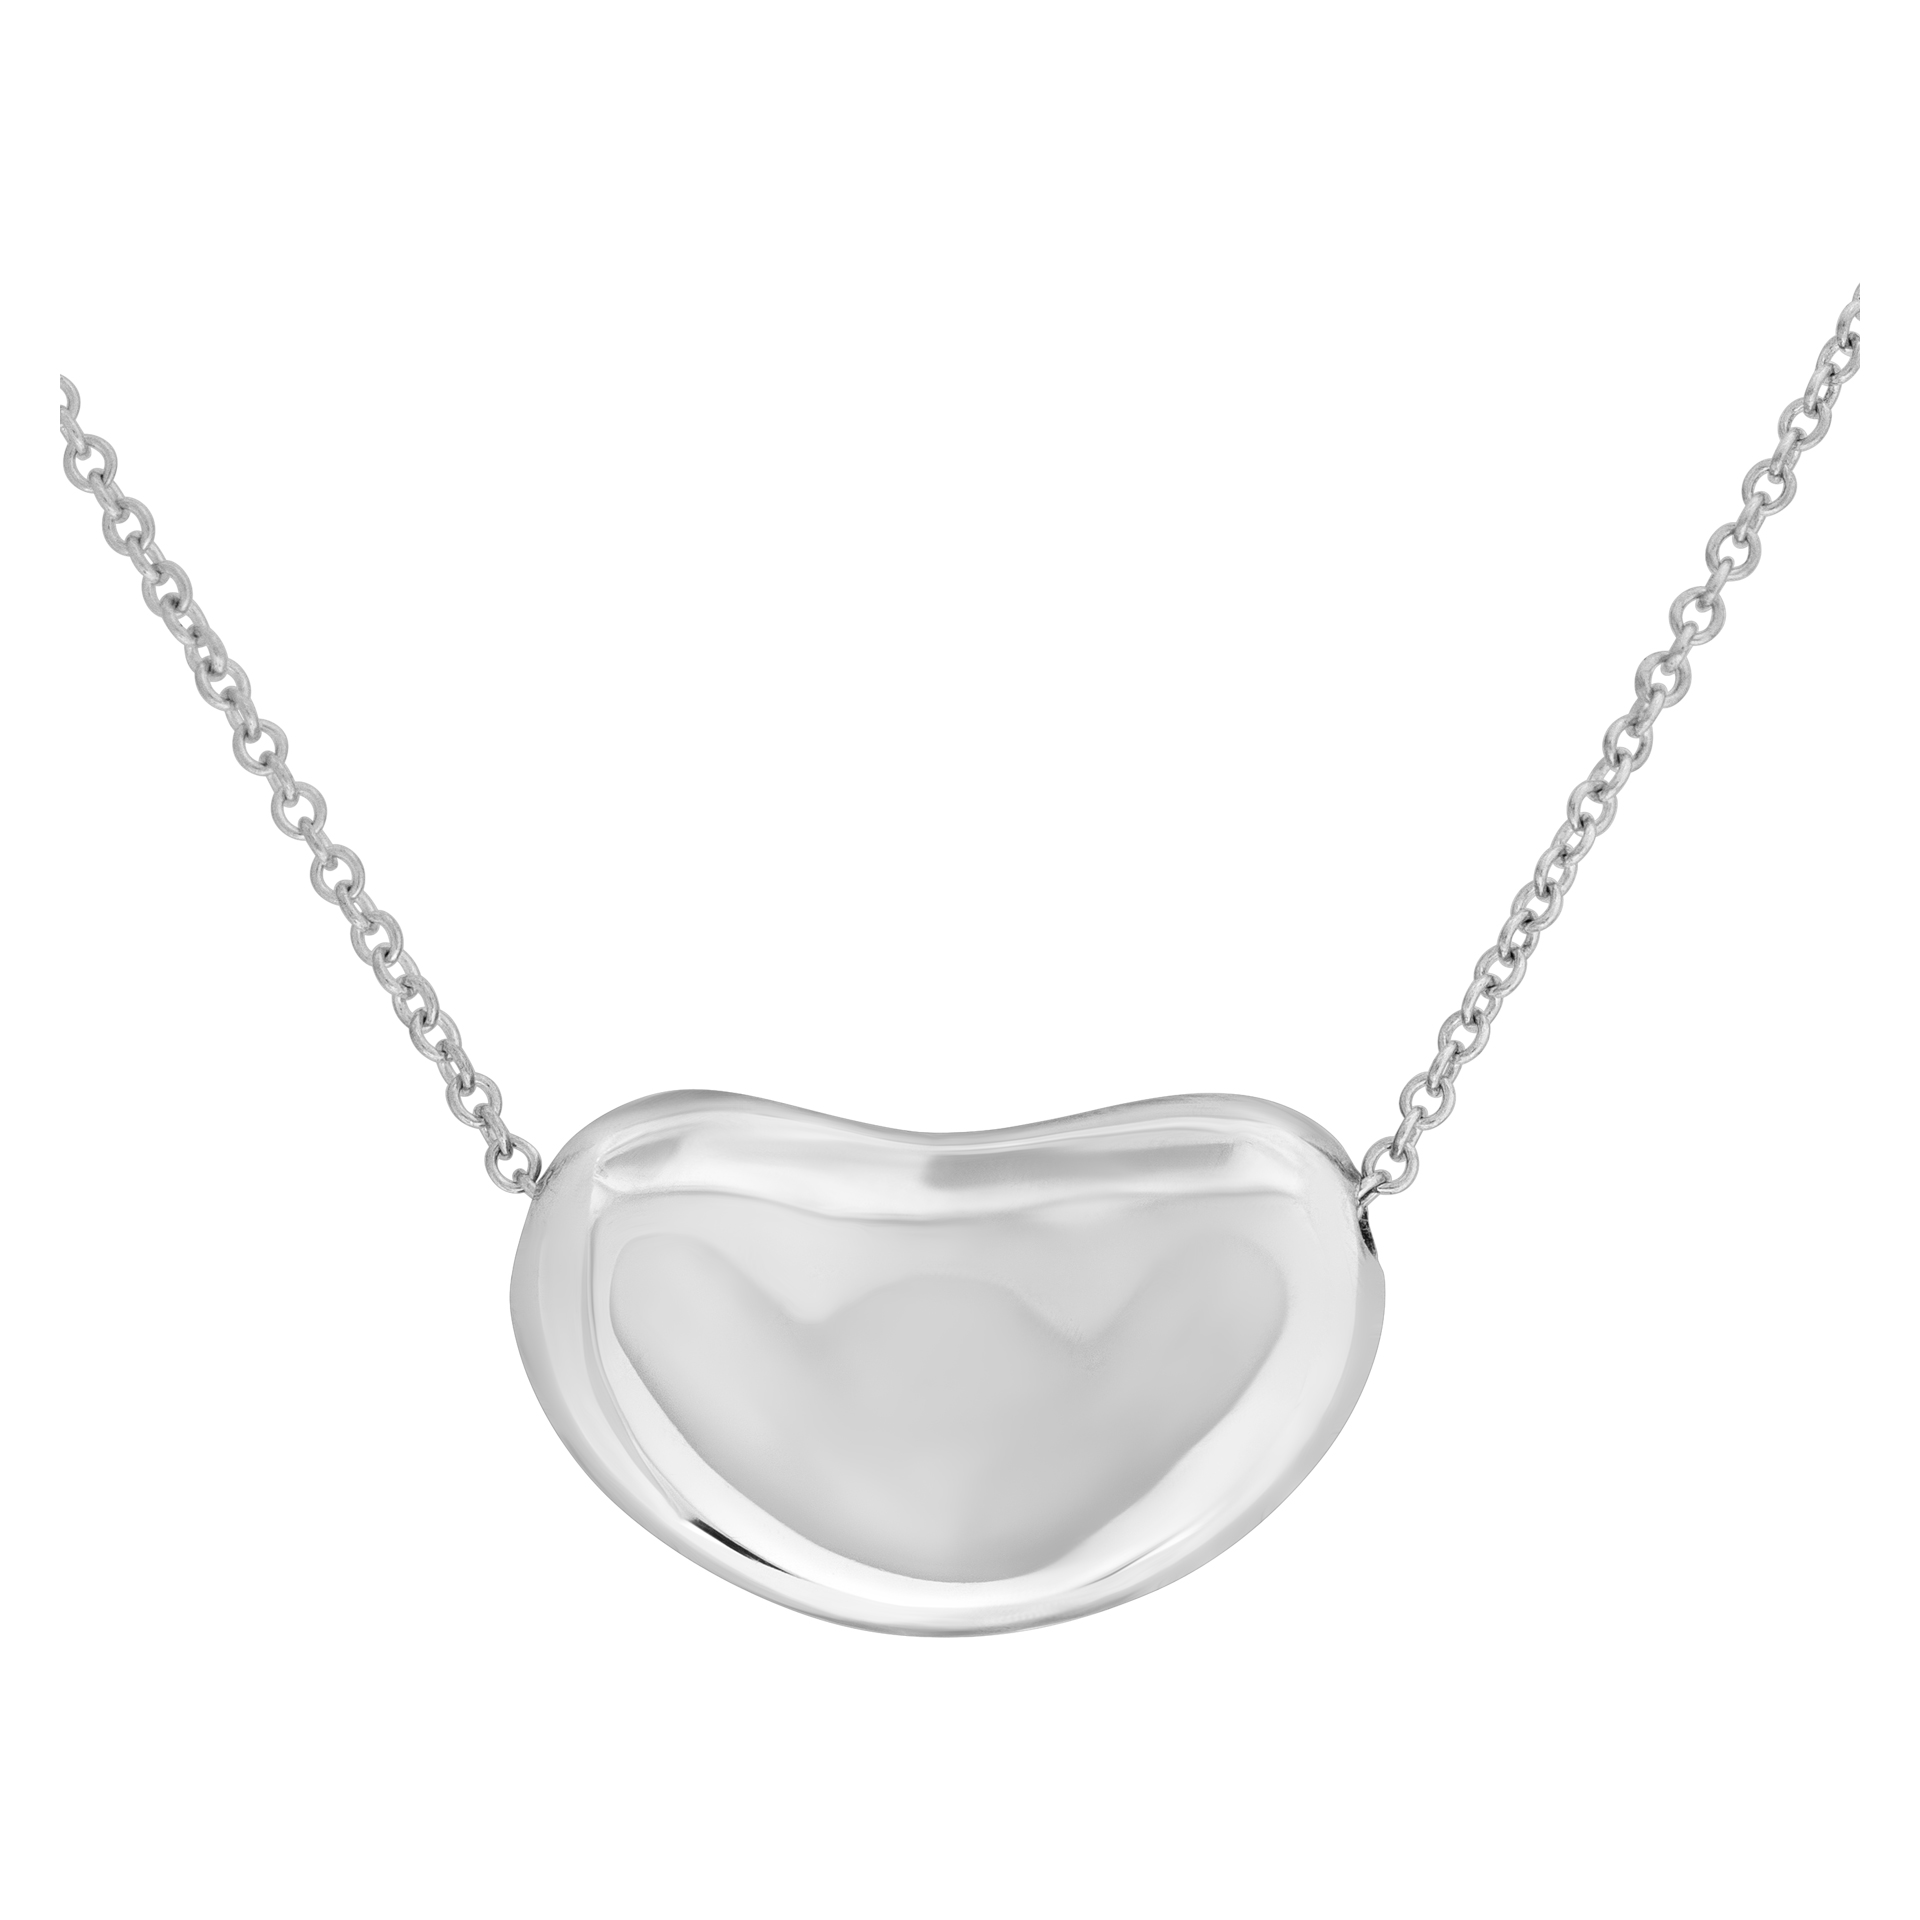 Tiffany & Co. 'Elsa Peretti' Bean Pendant necklace in sterling silver image 1